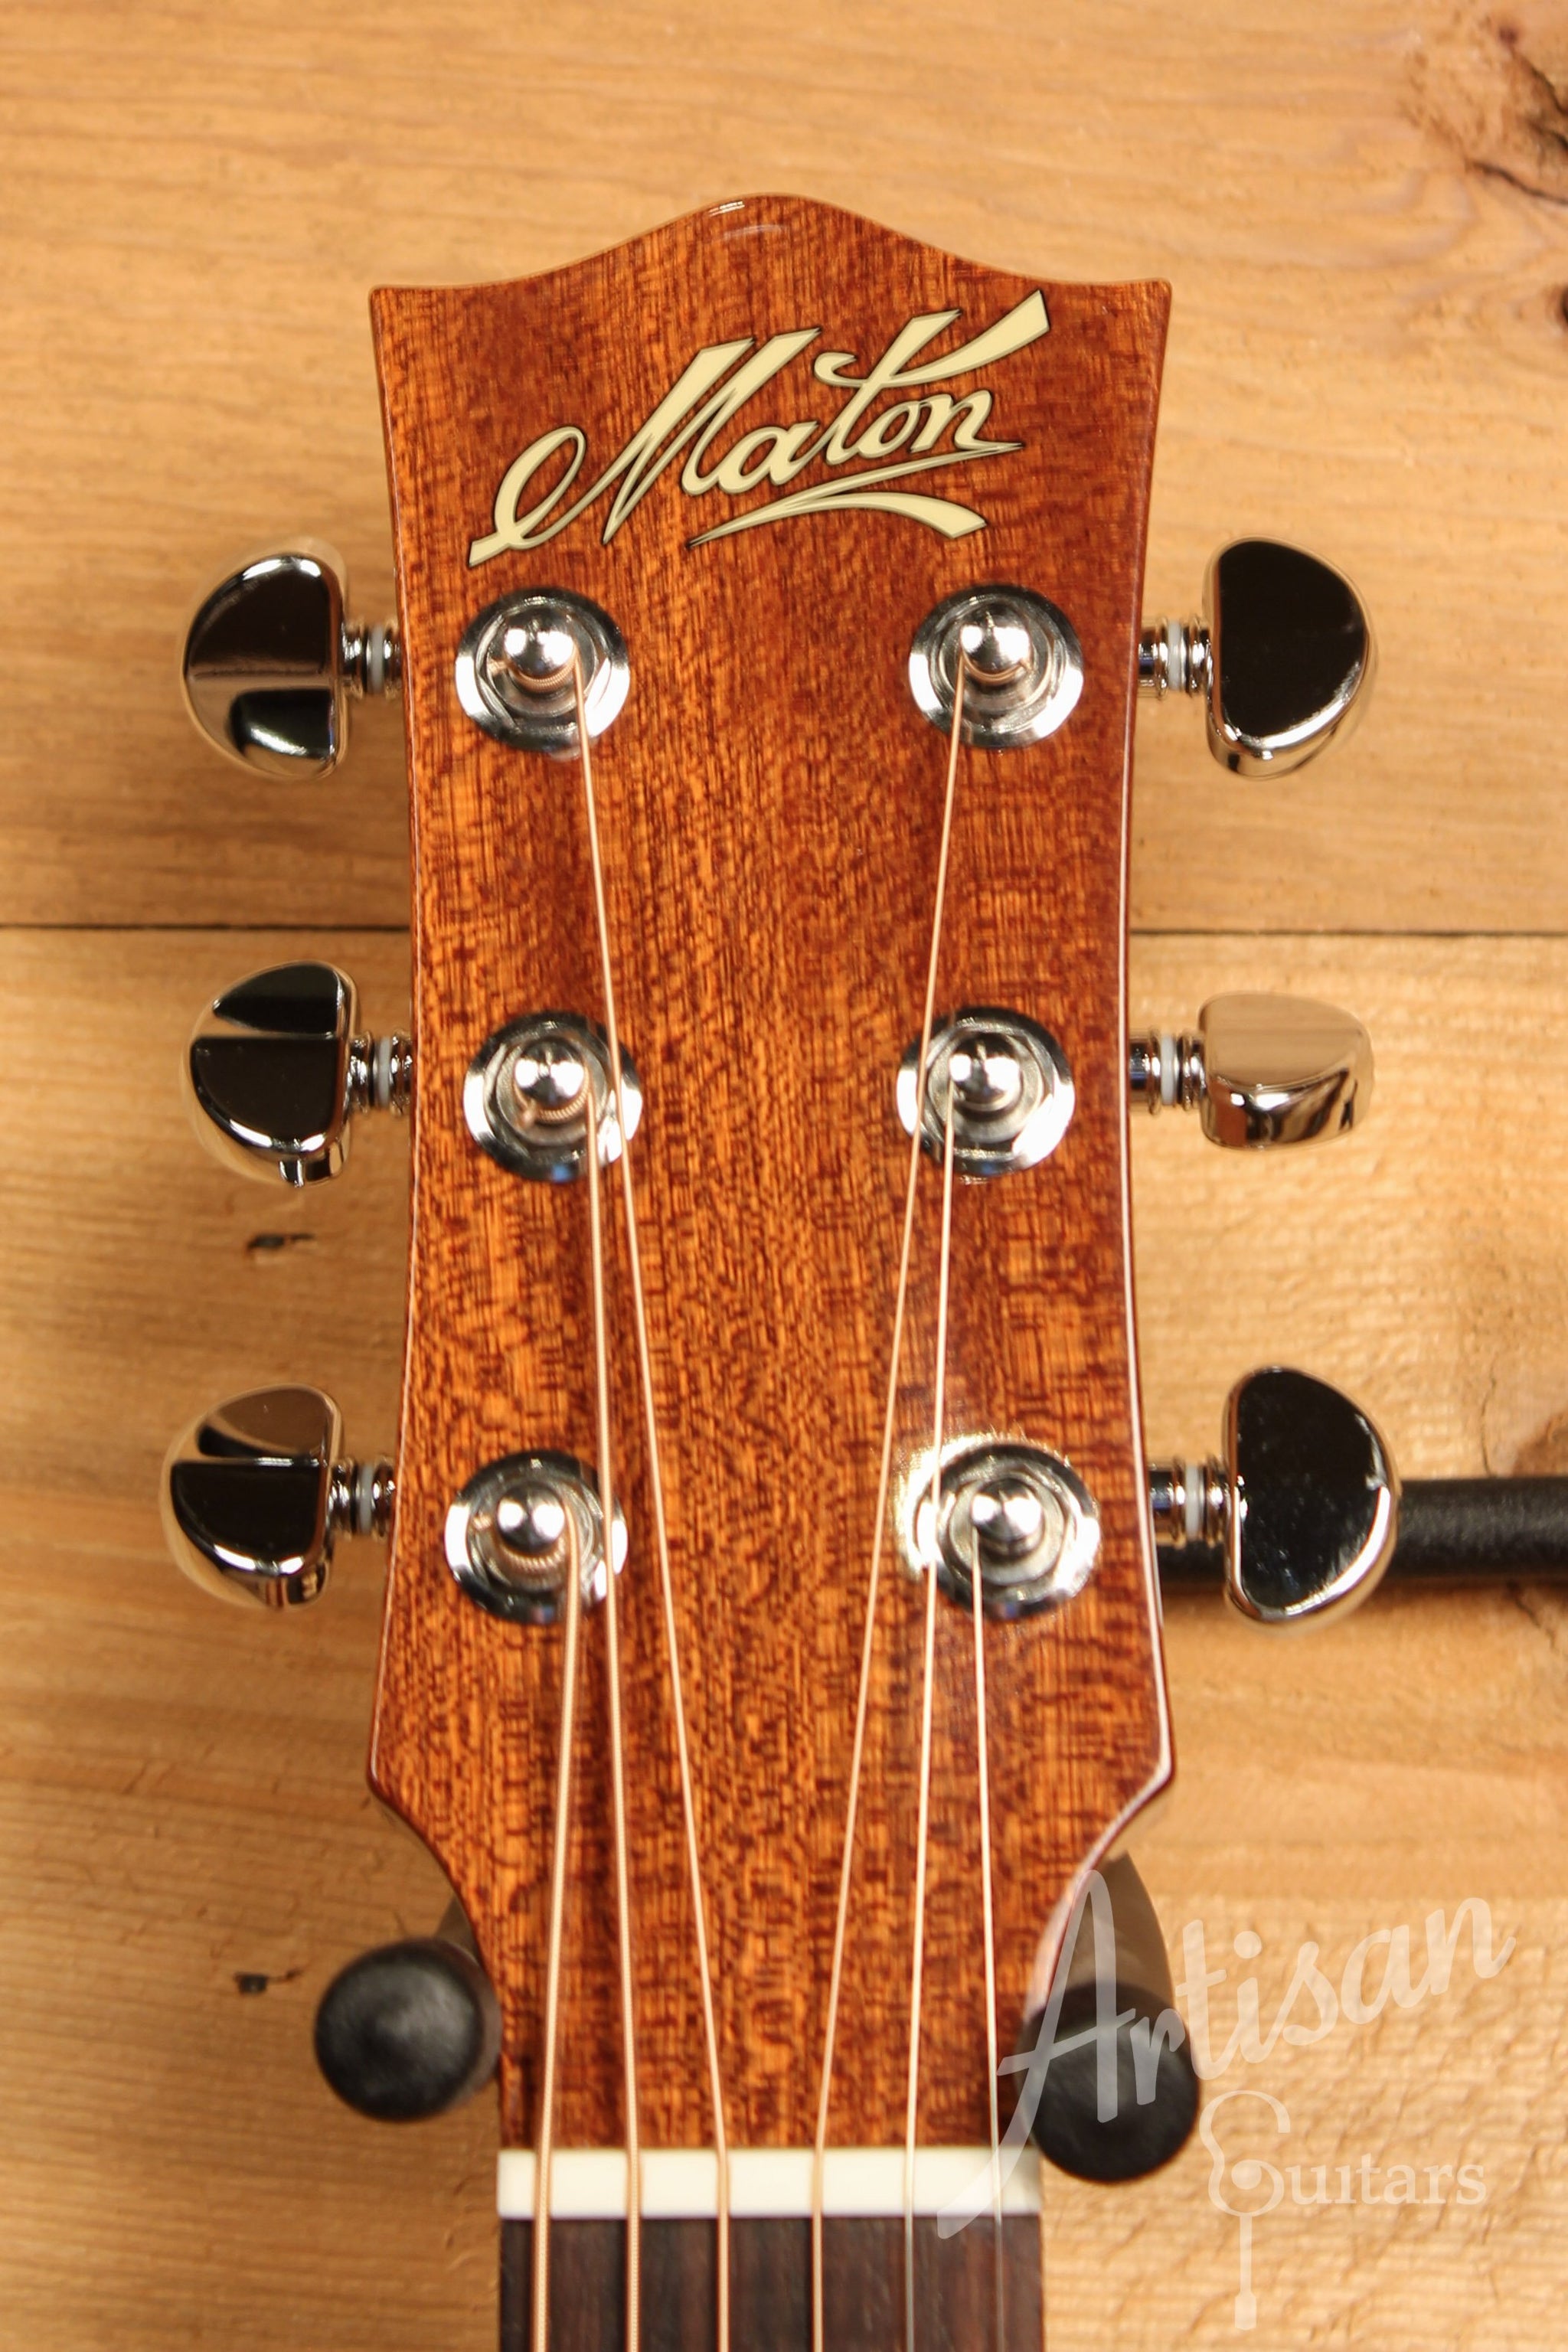 Maton Custom EBG808CL Performer Series Bunya and Queensland Maple Gloss Finish with Cutaway ID-11477 - Artisan Guitars